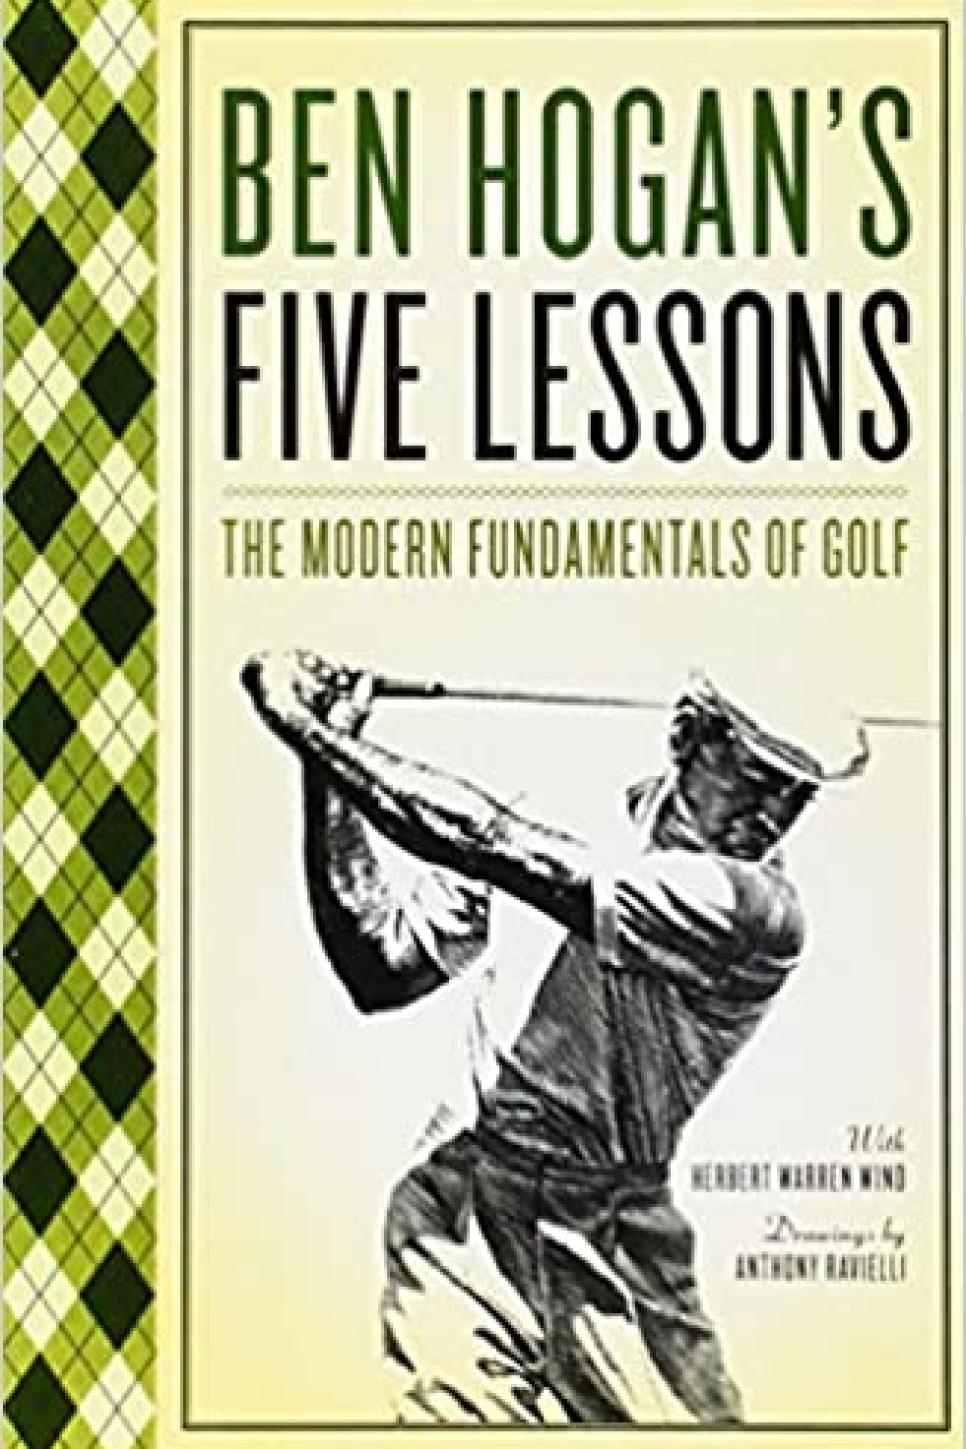 rx-amazonben-hogans-five-lessons-the-modern-fundamentals-of-golf.jpeg